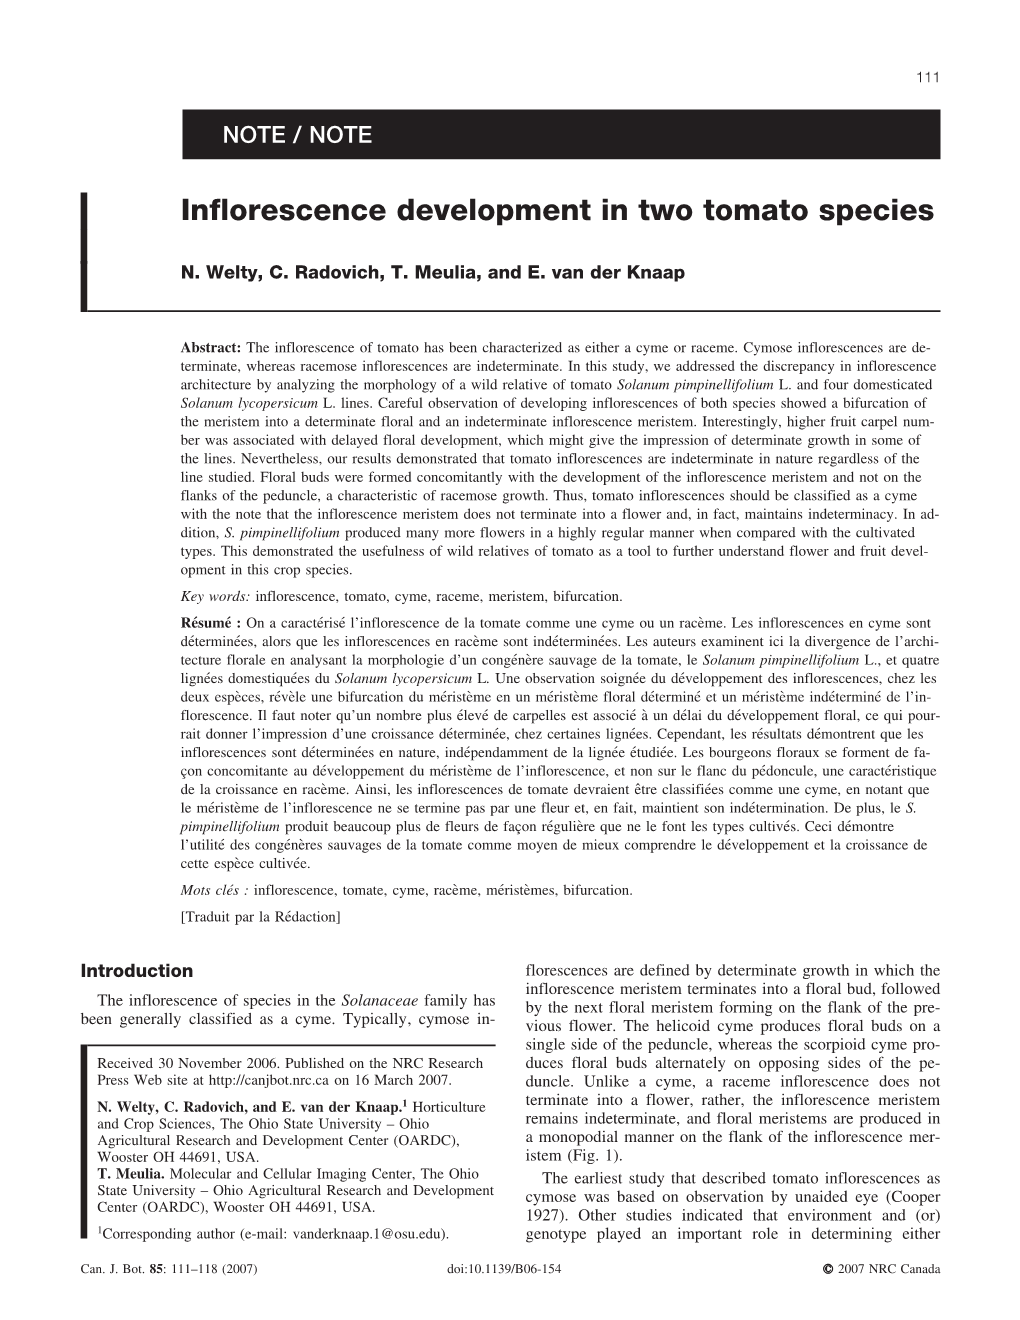 Inflorescence Development in Two Tomato Species